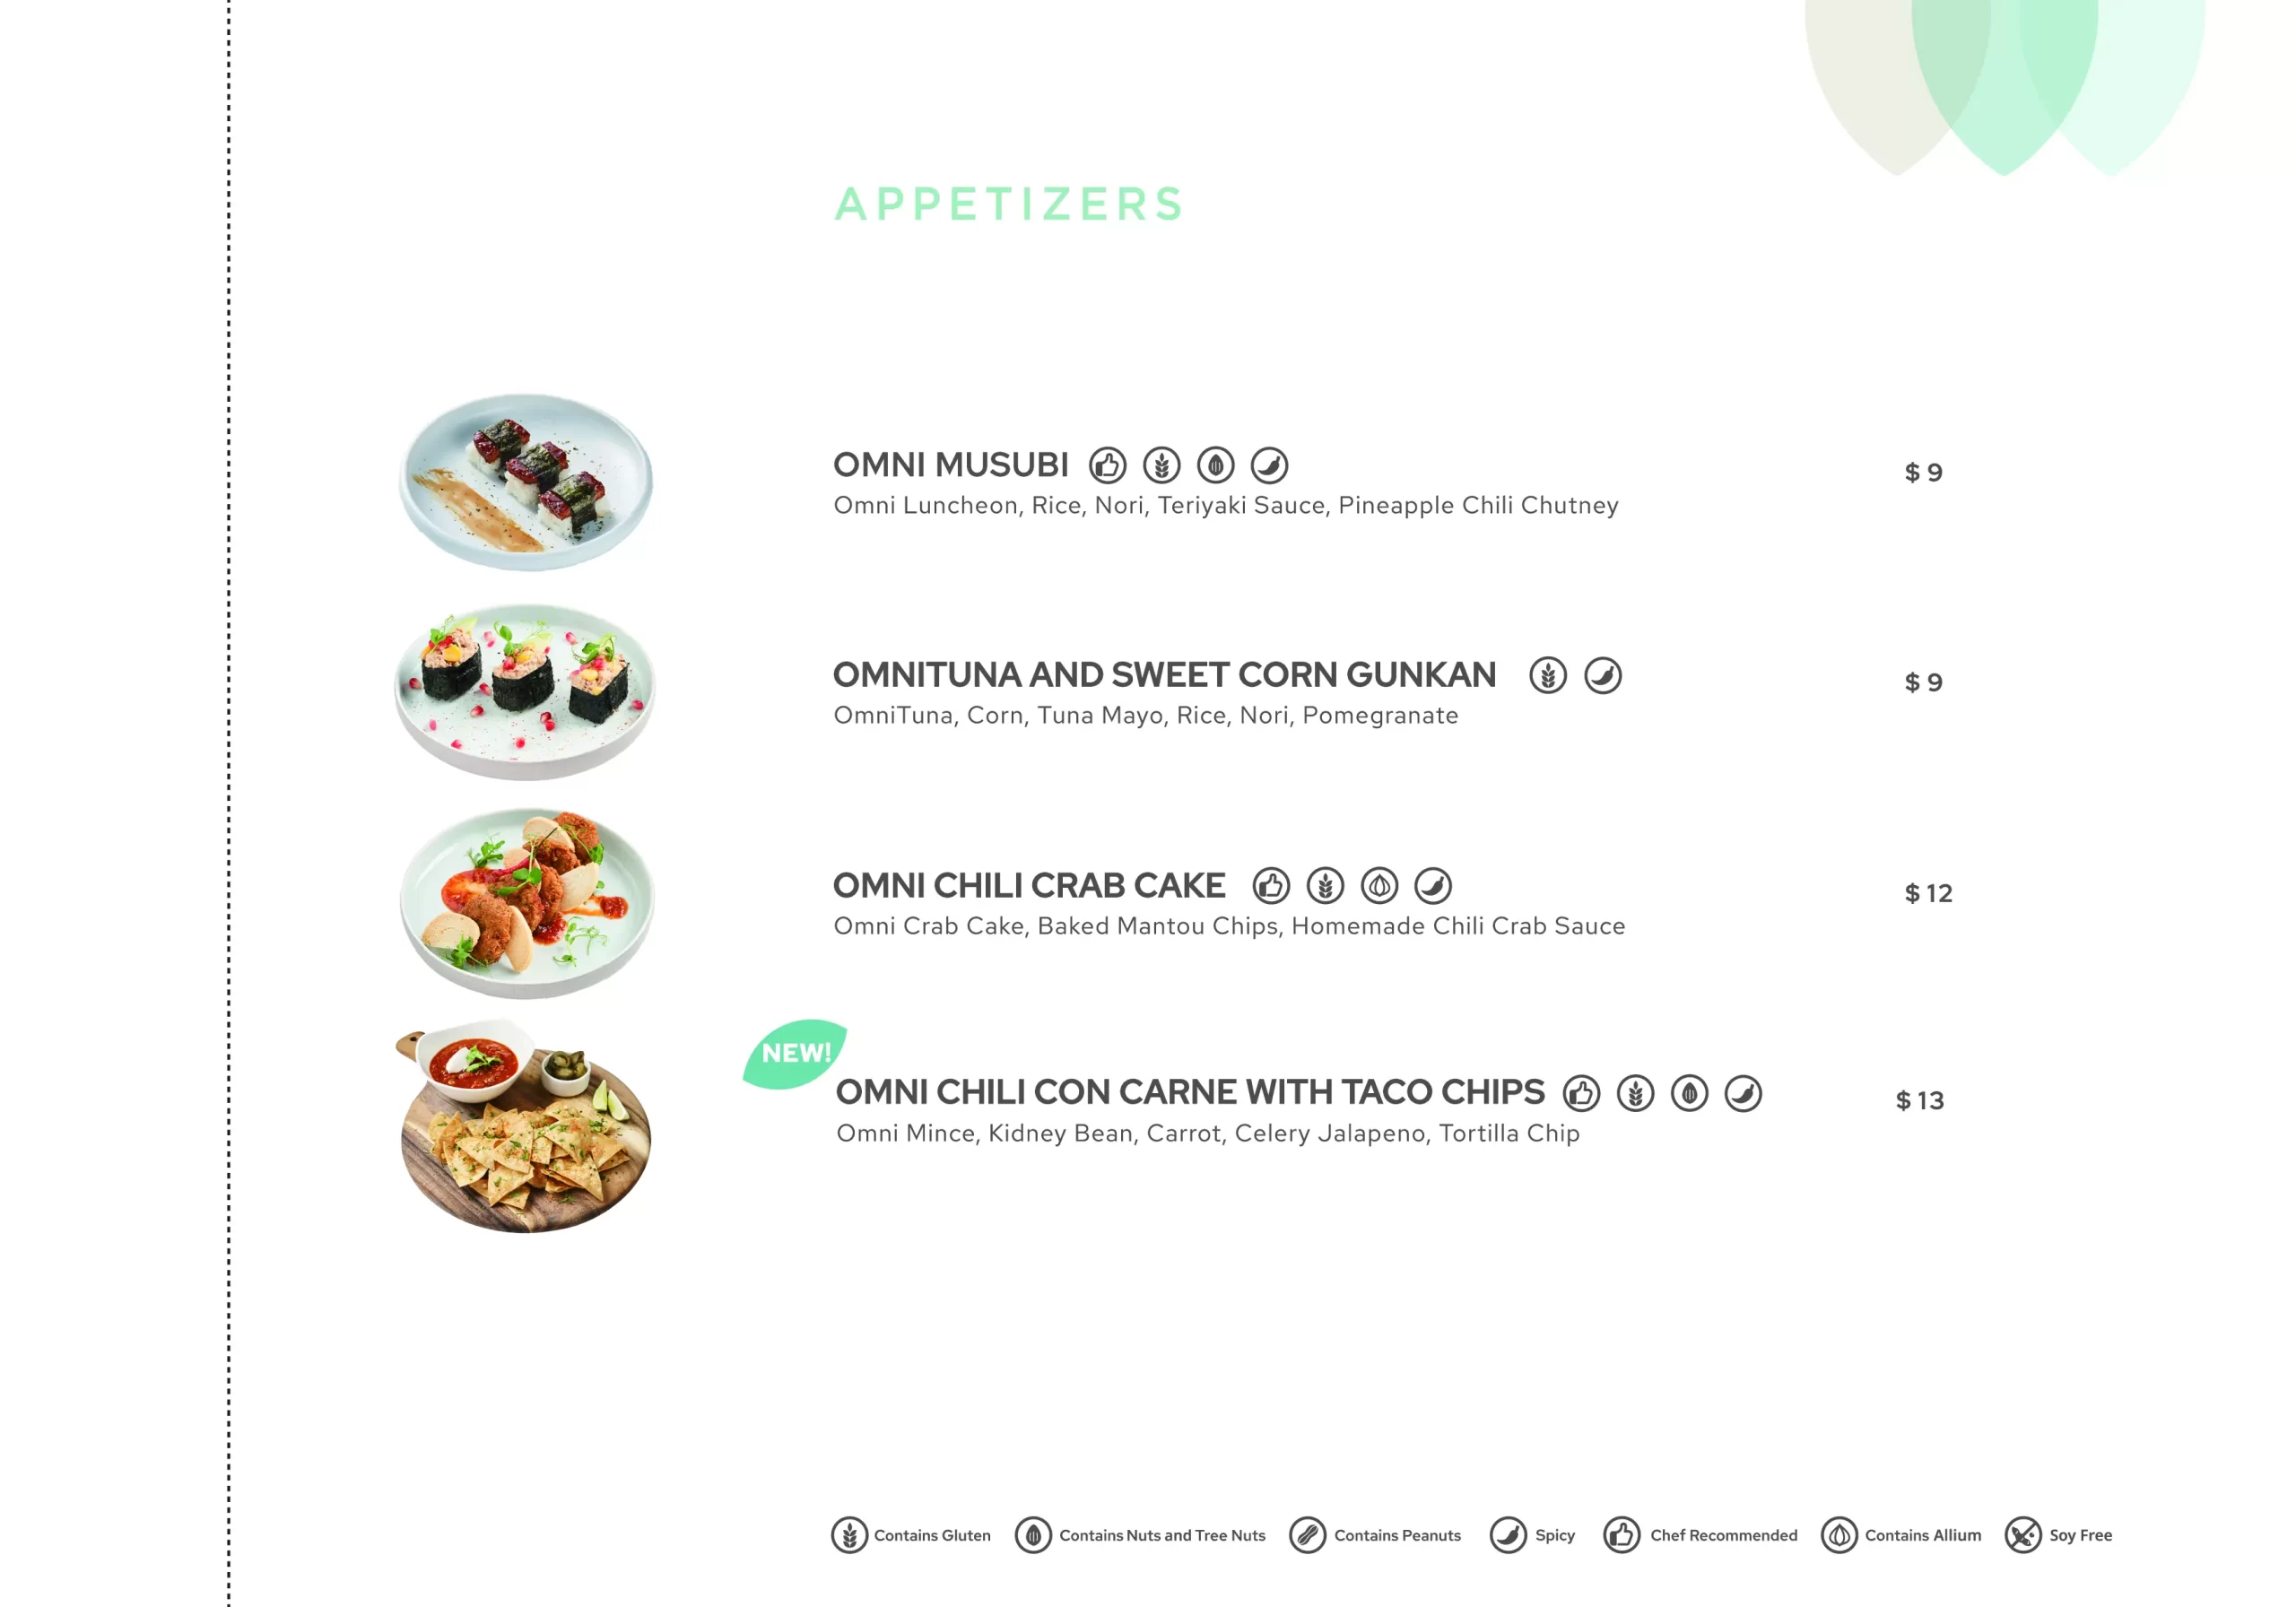 Green Common appetizers menu